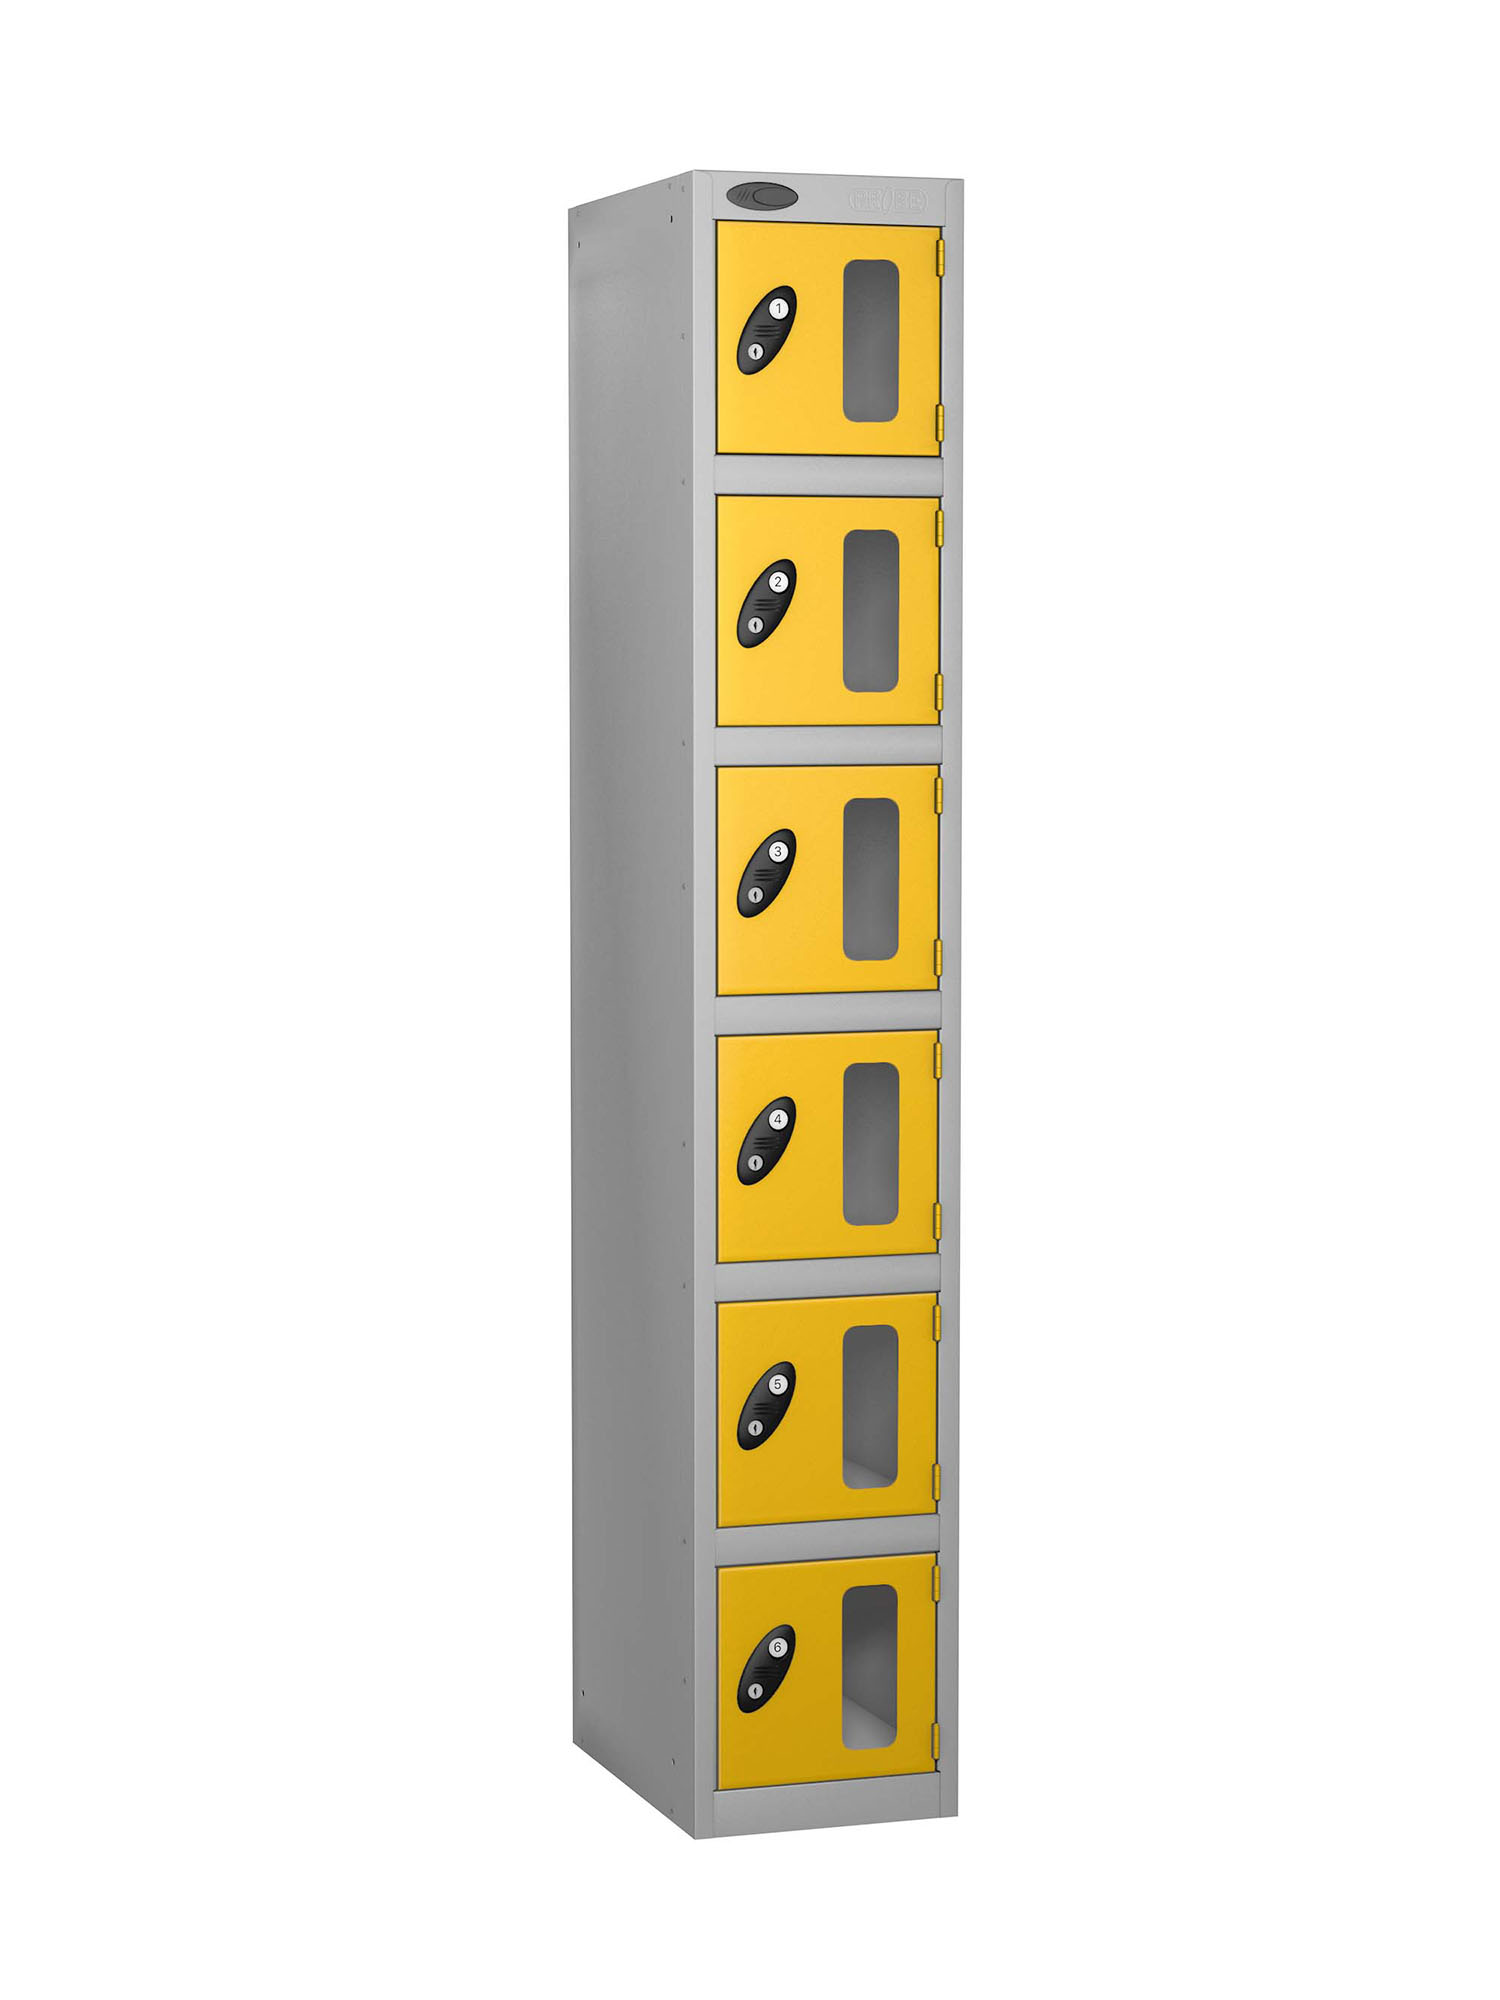 Probe 6 doors vision panel anti-stock theft locker yellow